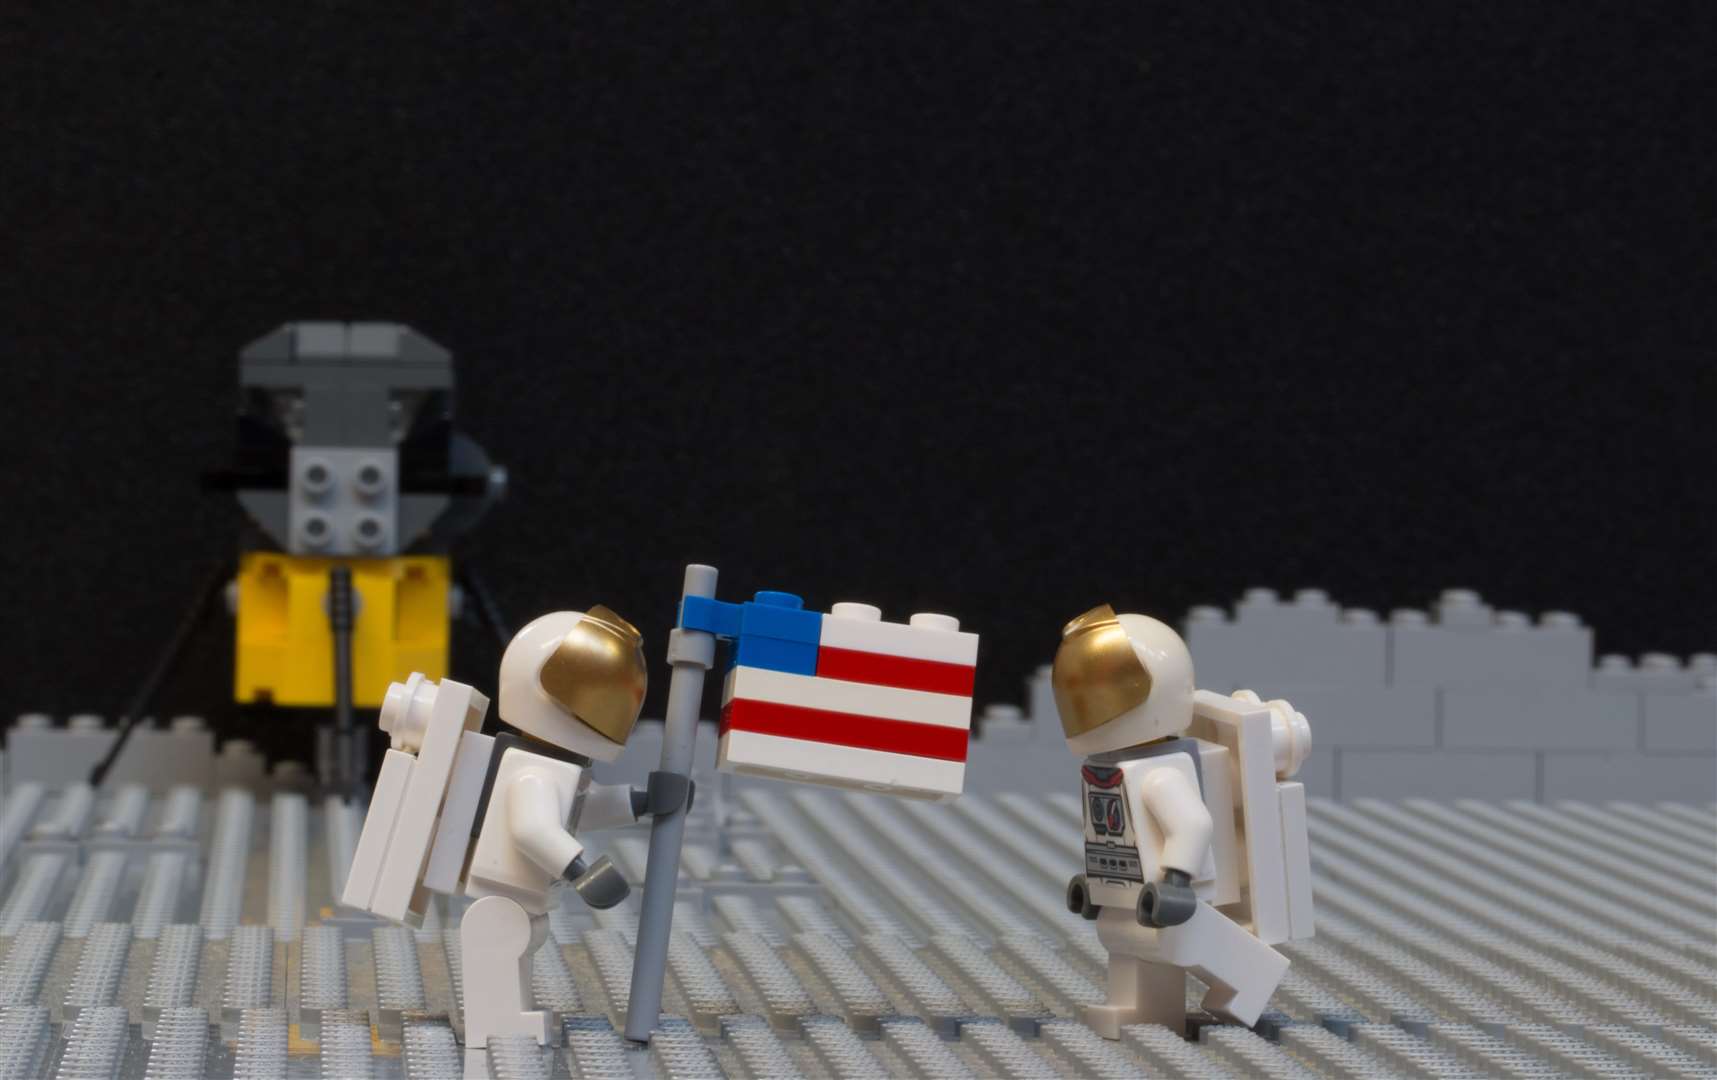 The moon landings